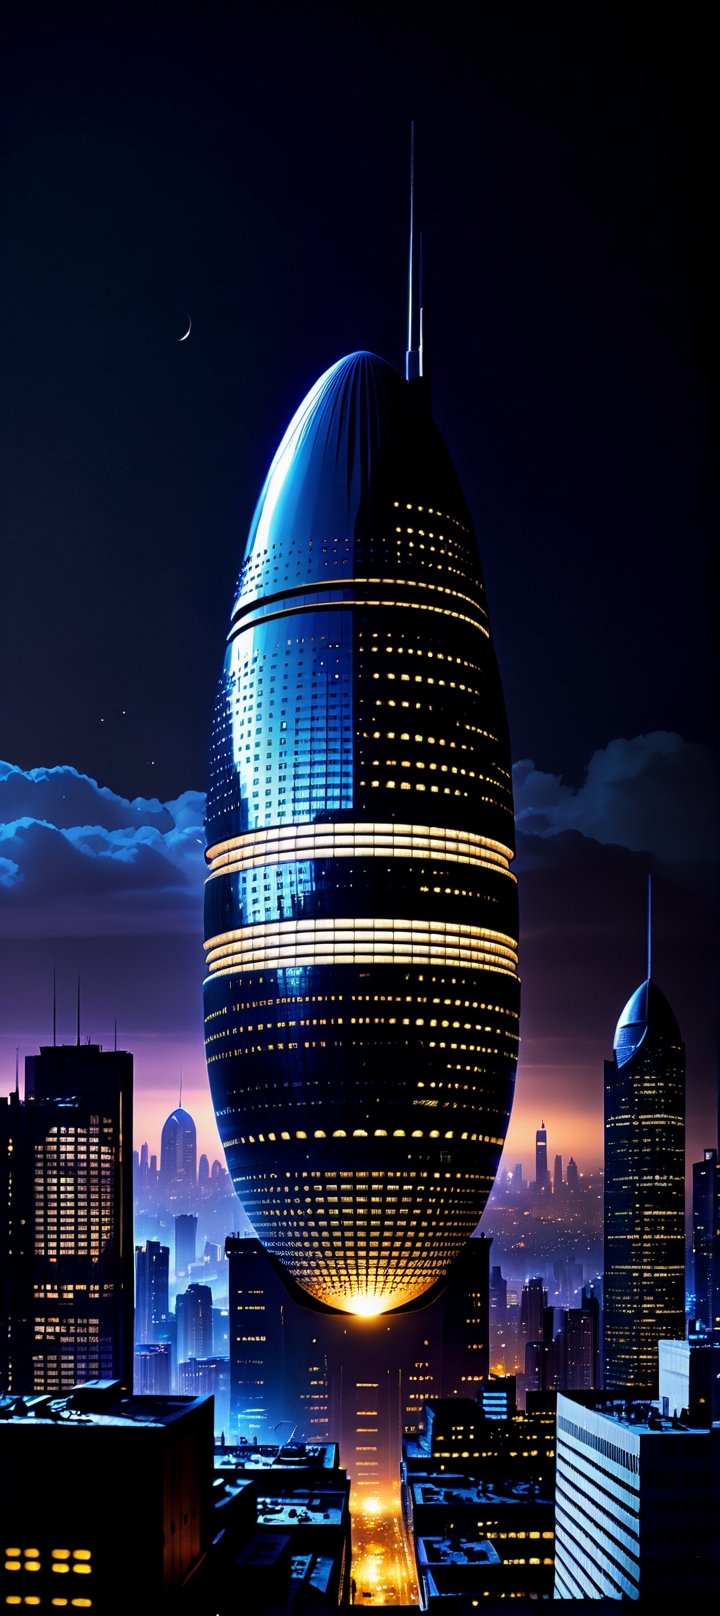 Dark Gerkin egg shaped Skyscraper towering above SciFi cityscape, Cyberpunk, (midnight:1.4), realistic, cinematic lighting, 